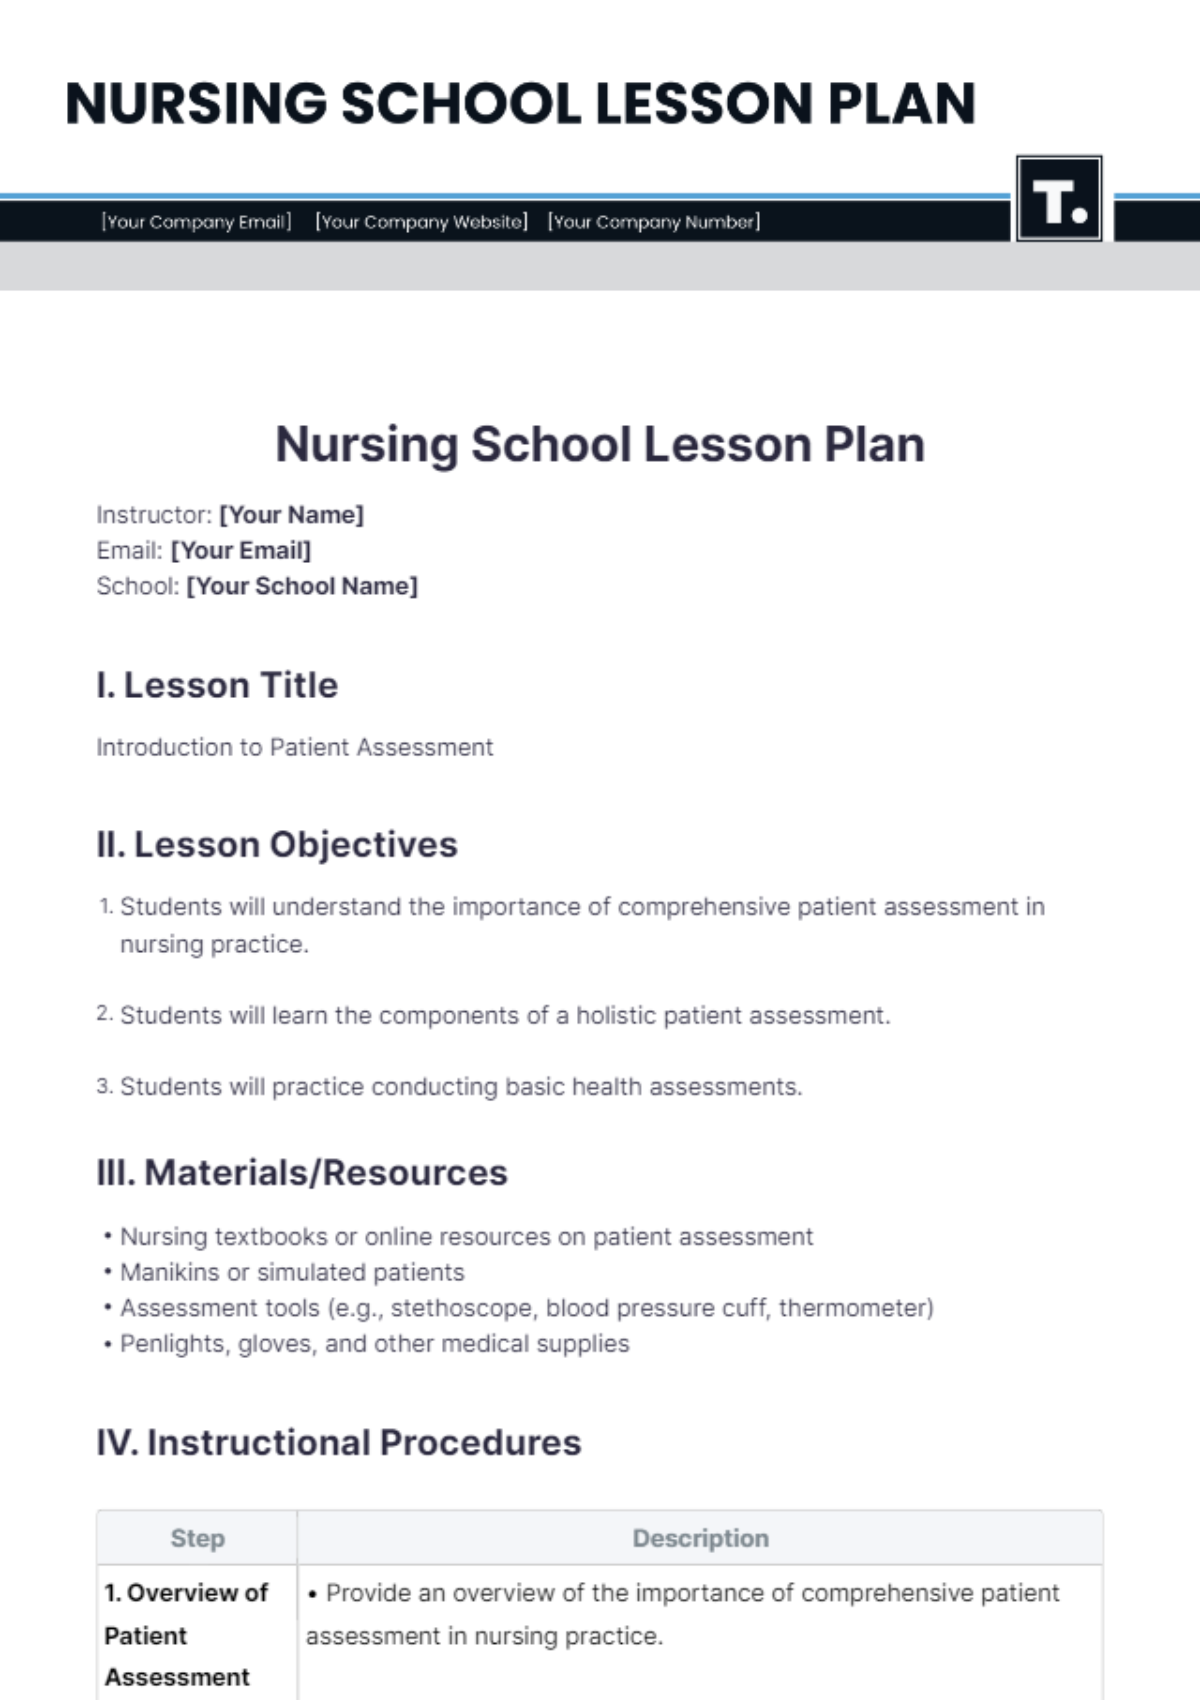 Free Nursing School Lesson Plan Template